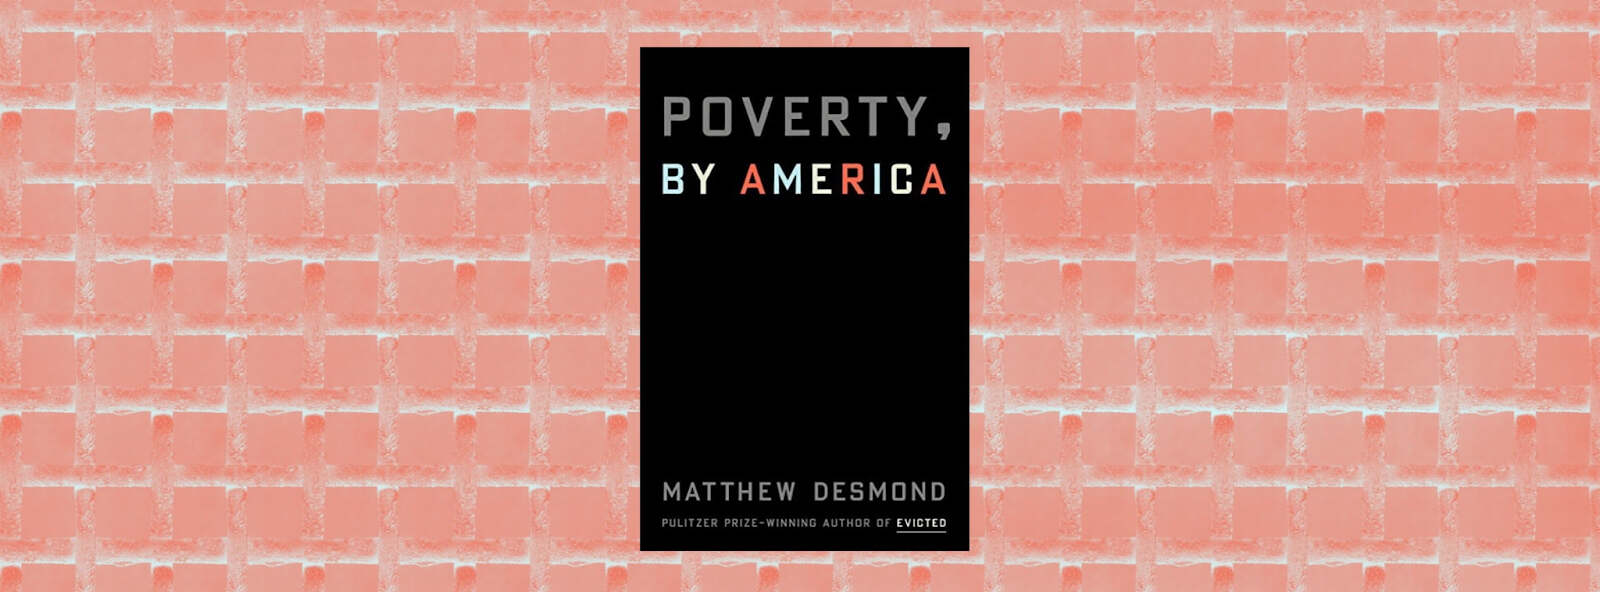 poverty-by-america-matthew-desmond